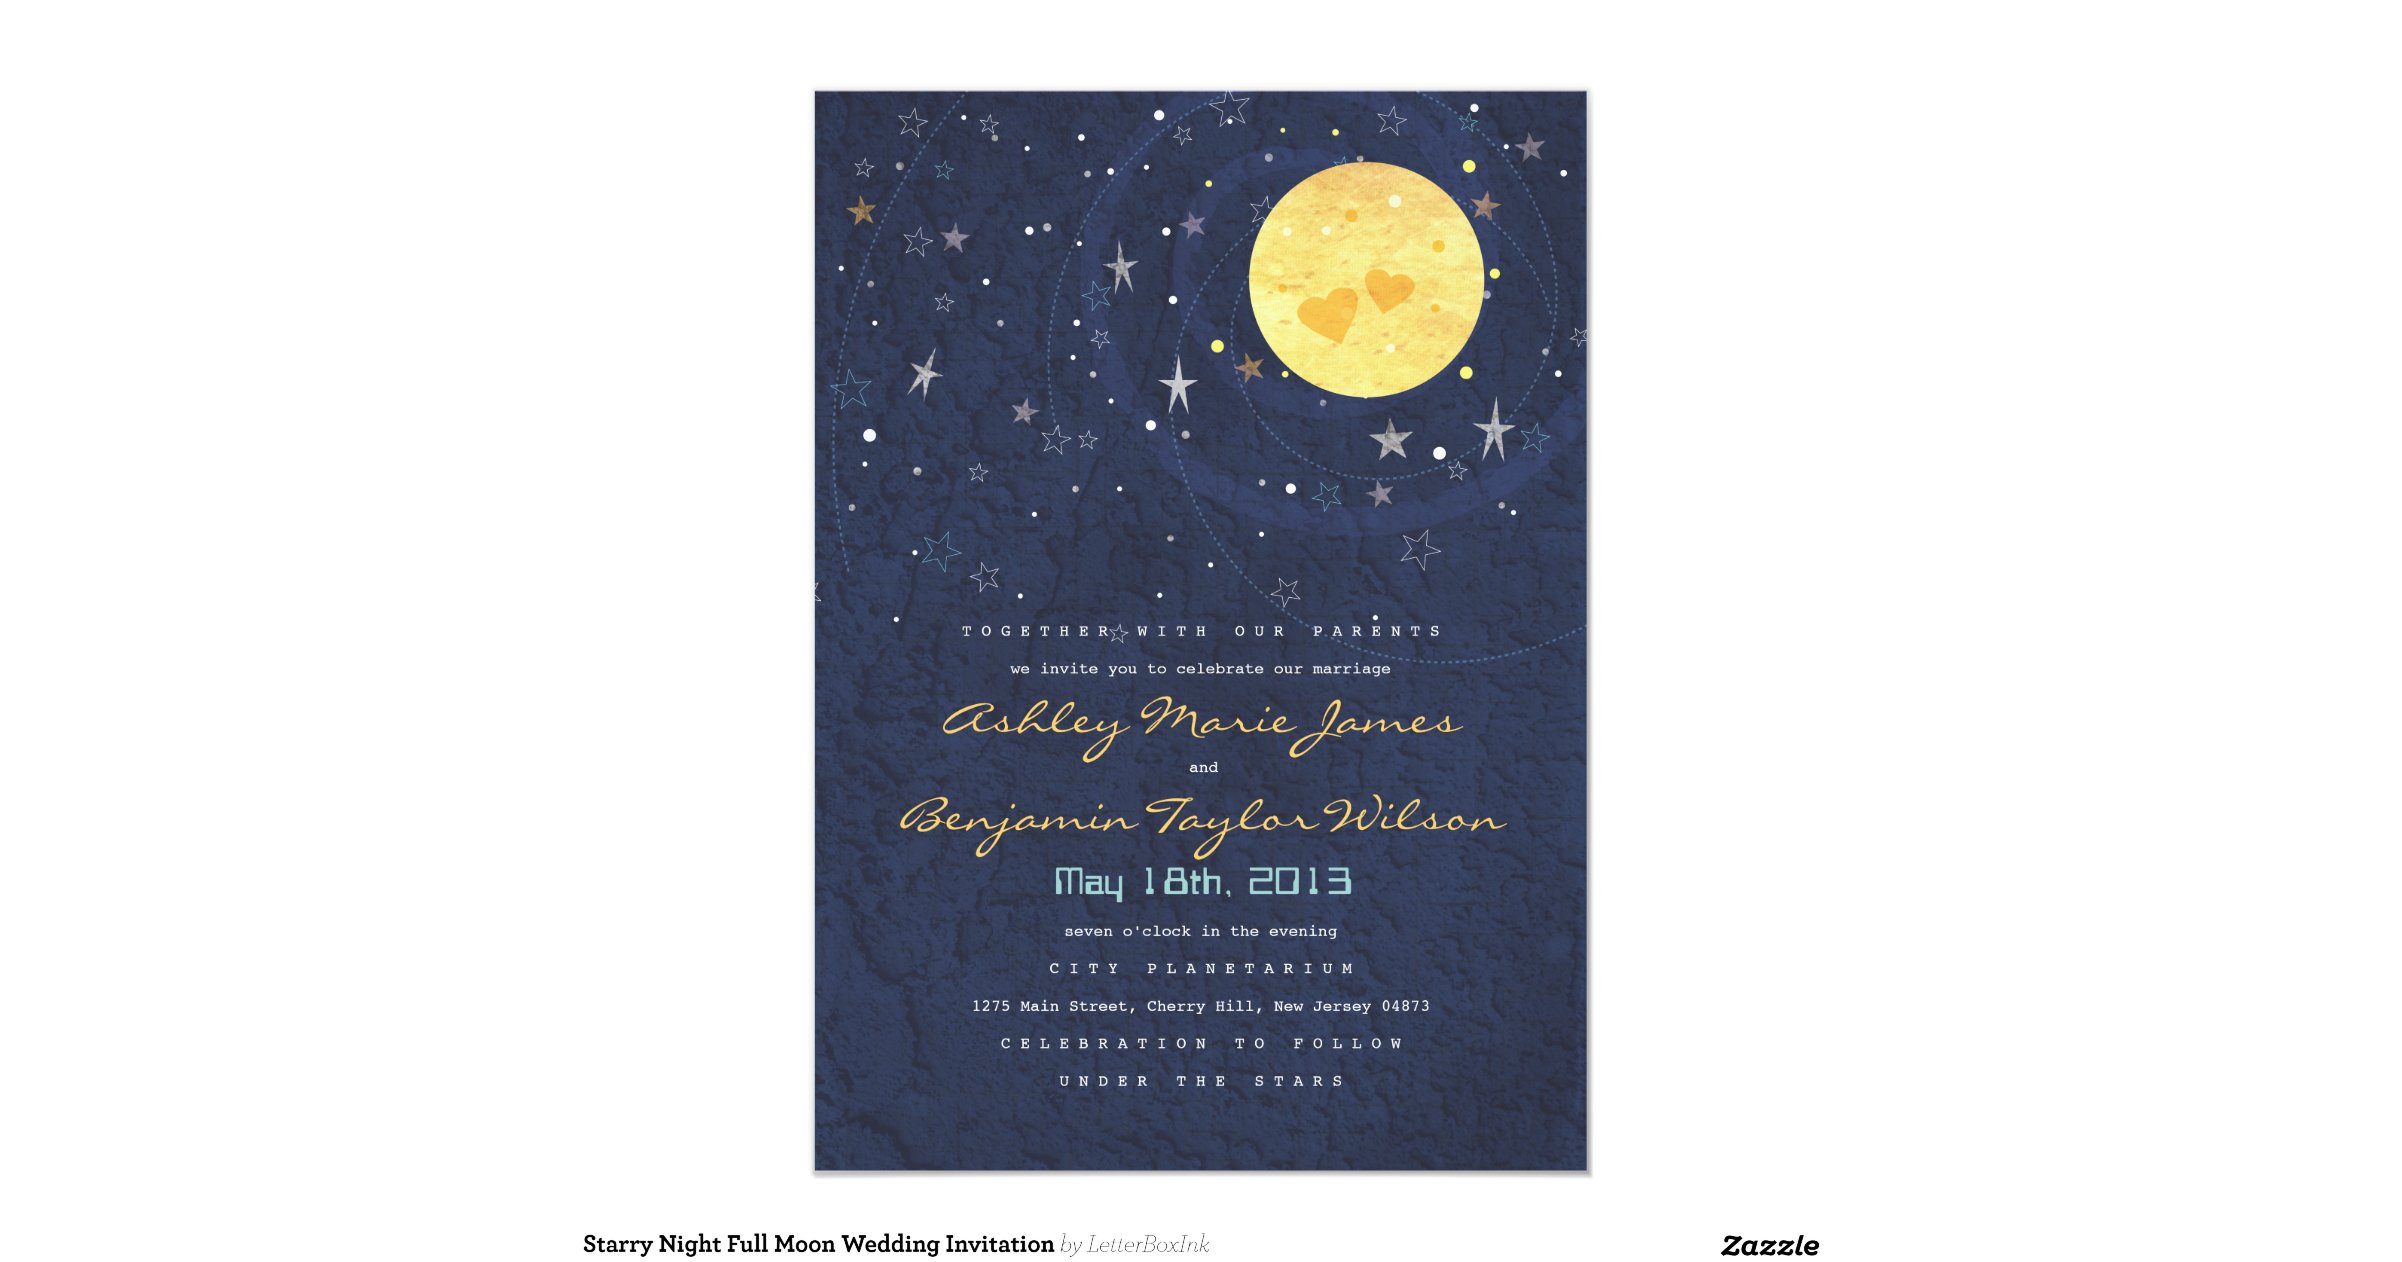 starry_night_full_moon_wedding_invitation